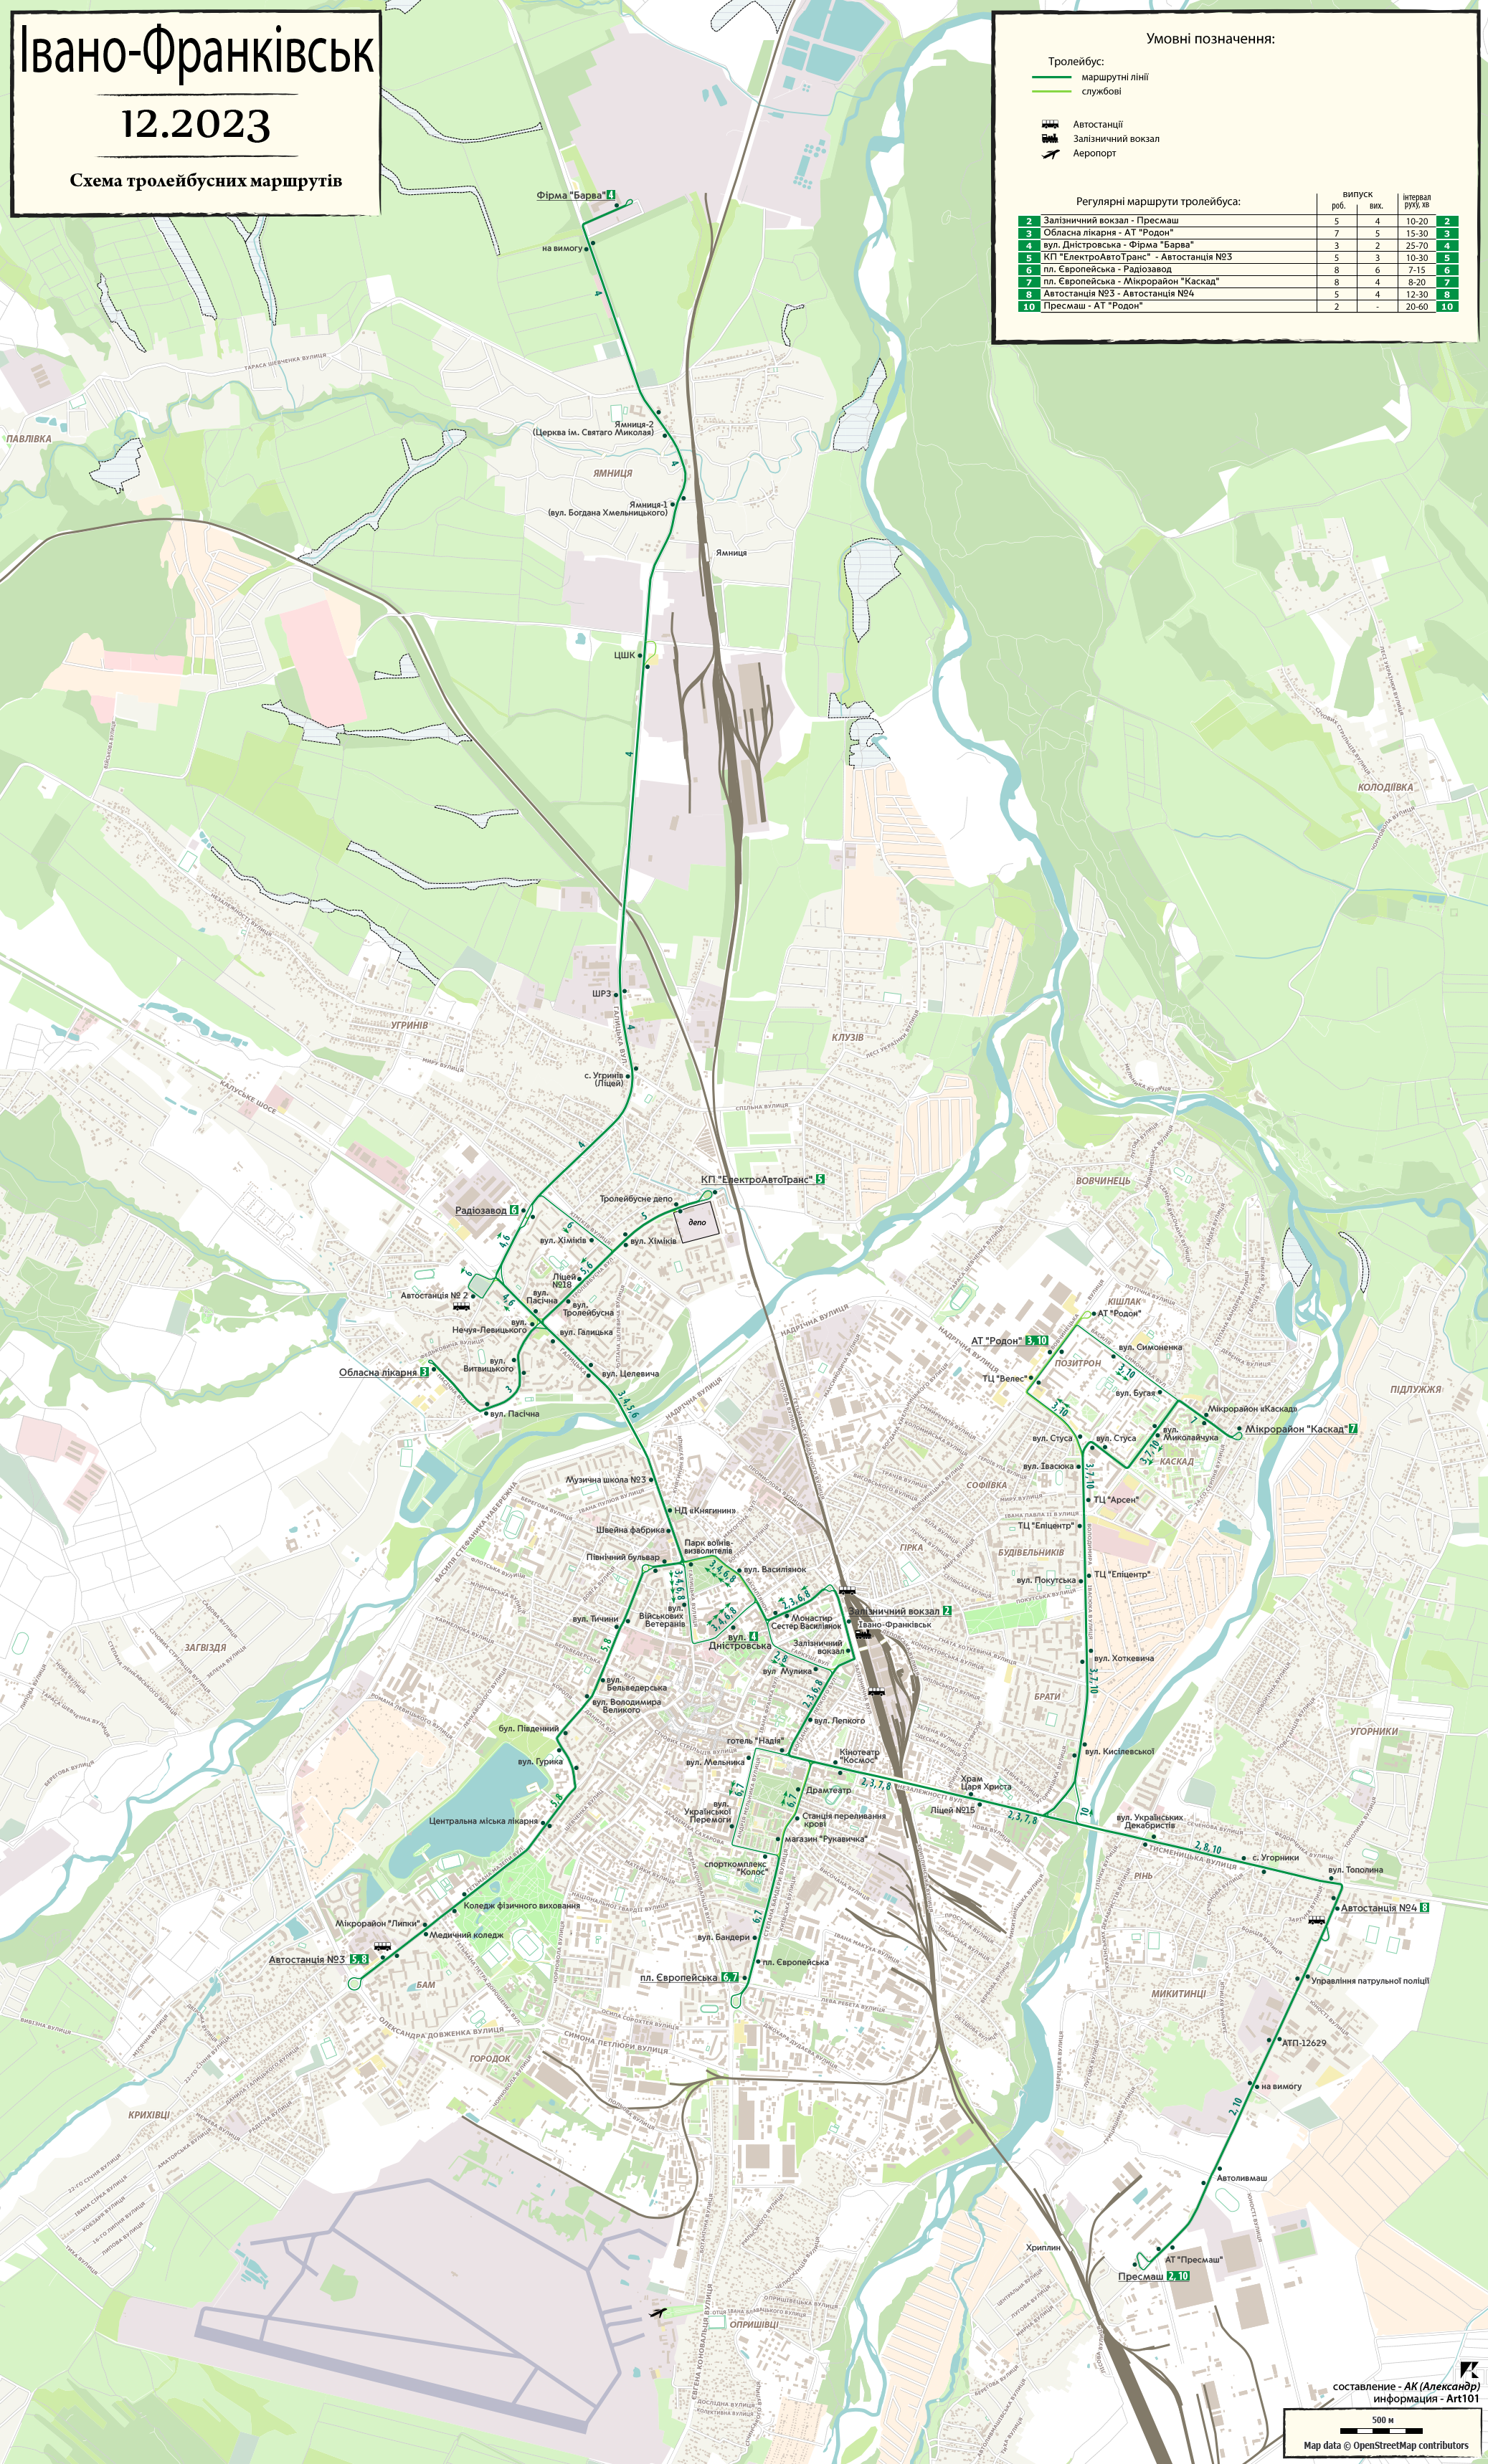 Ivano-Frankivsk — Maps